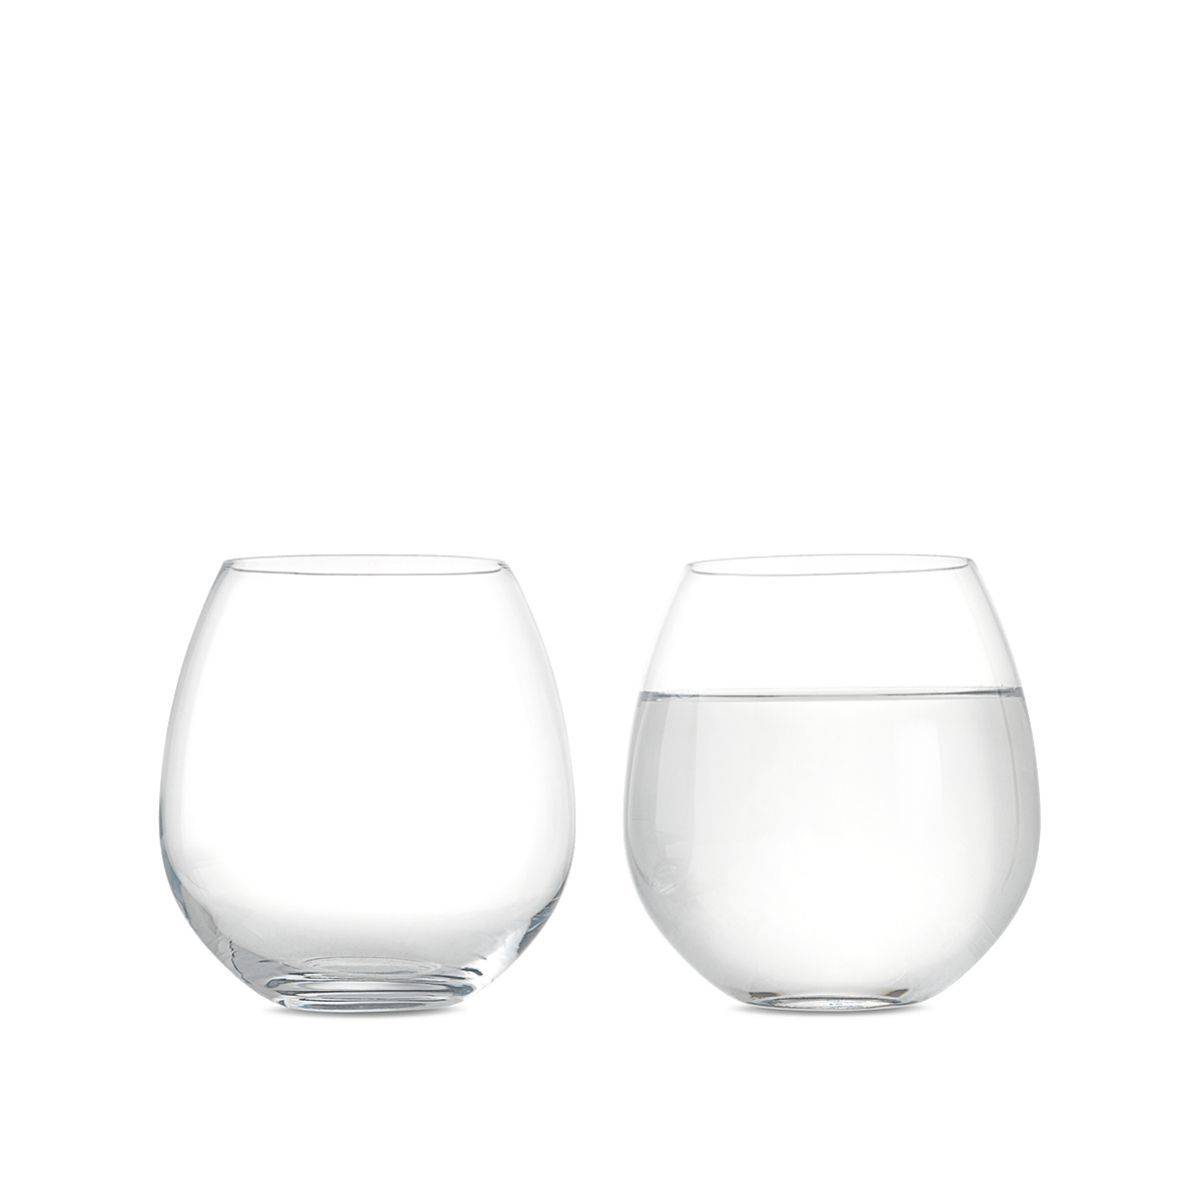 Premium vandglas 2 stk 52 cl